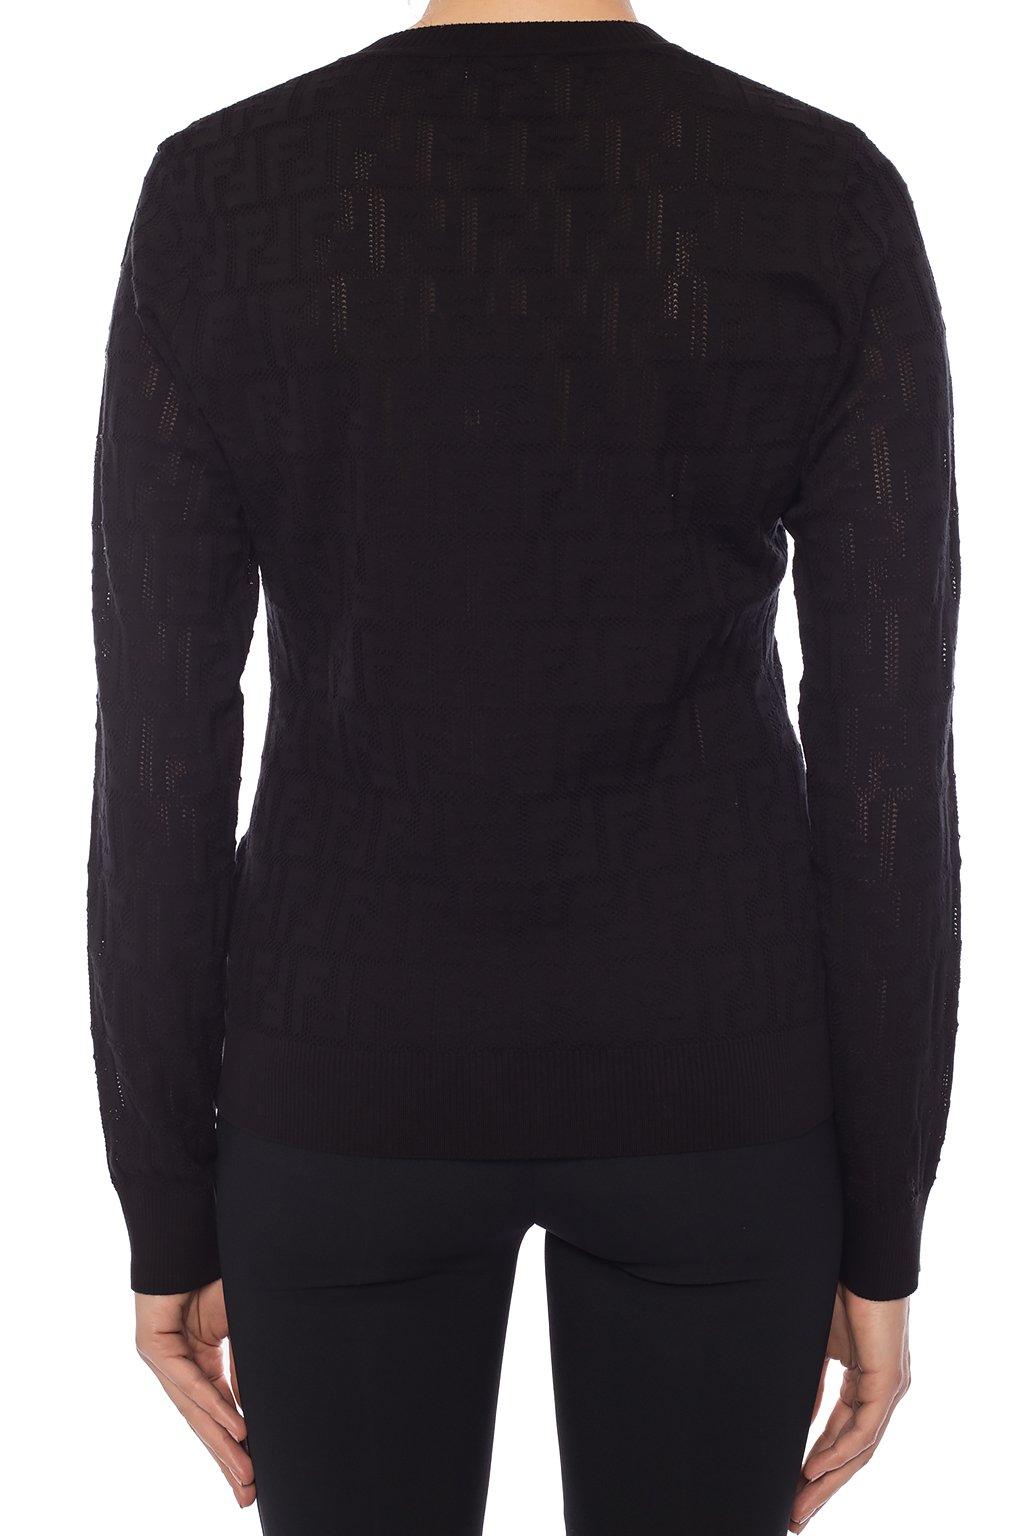 Fendi Ff Motif Sweater in Black - Lyst